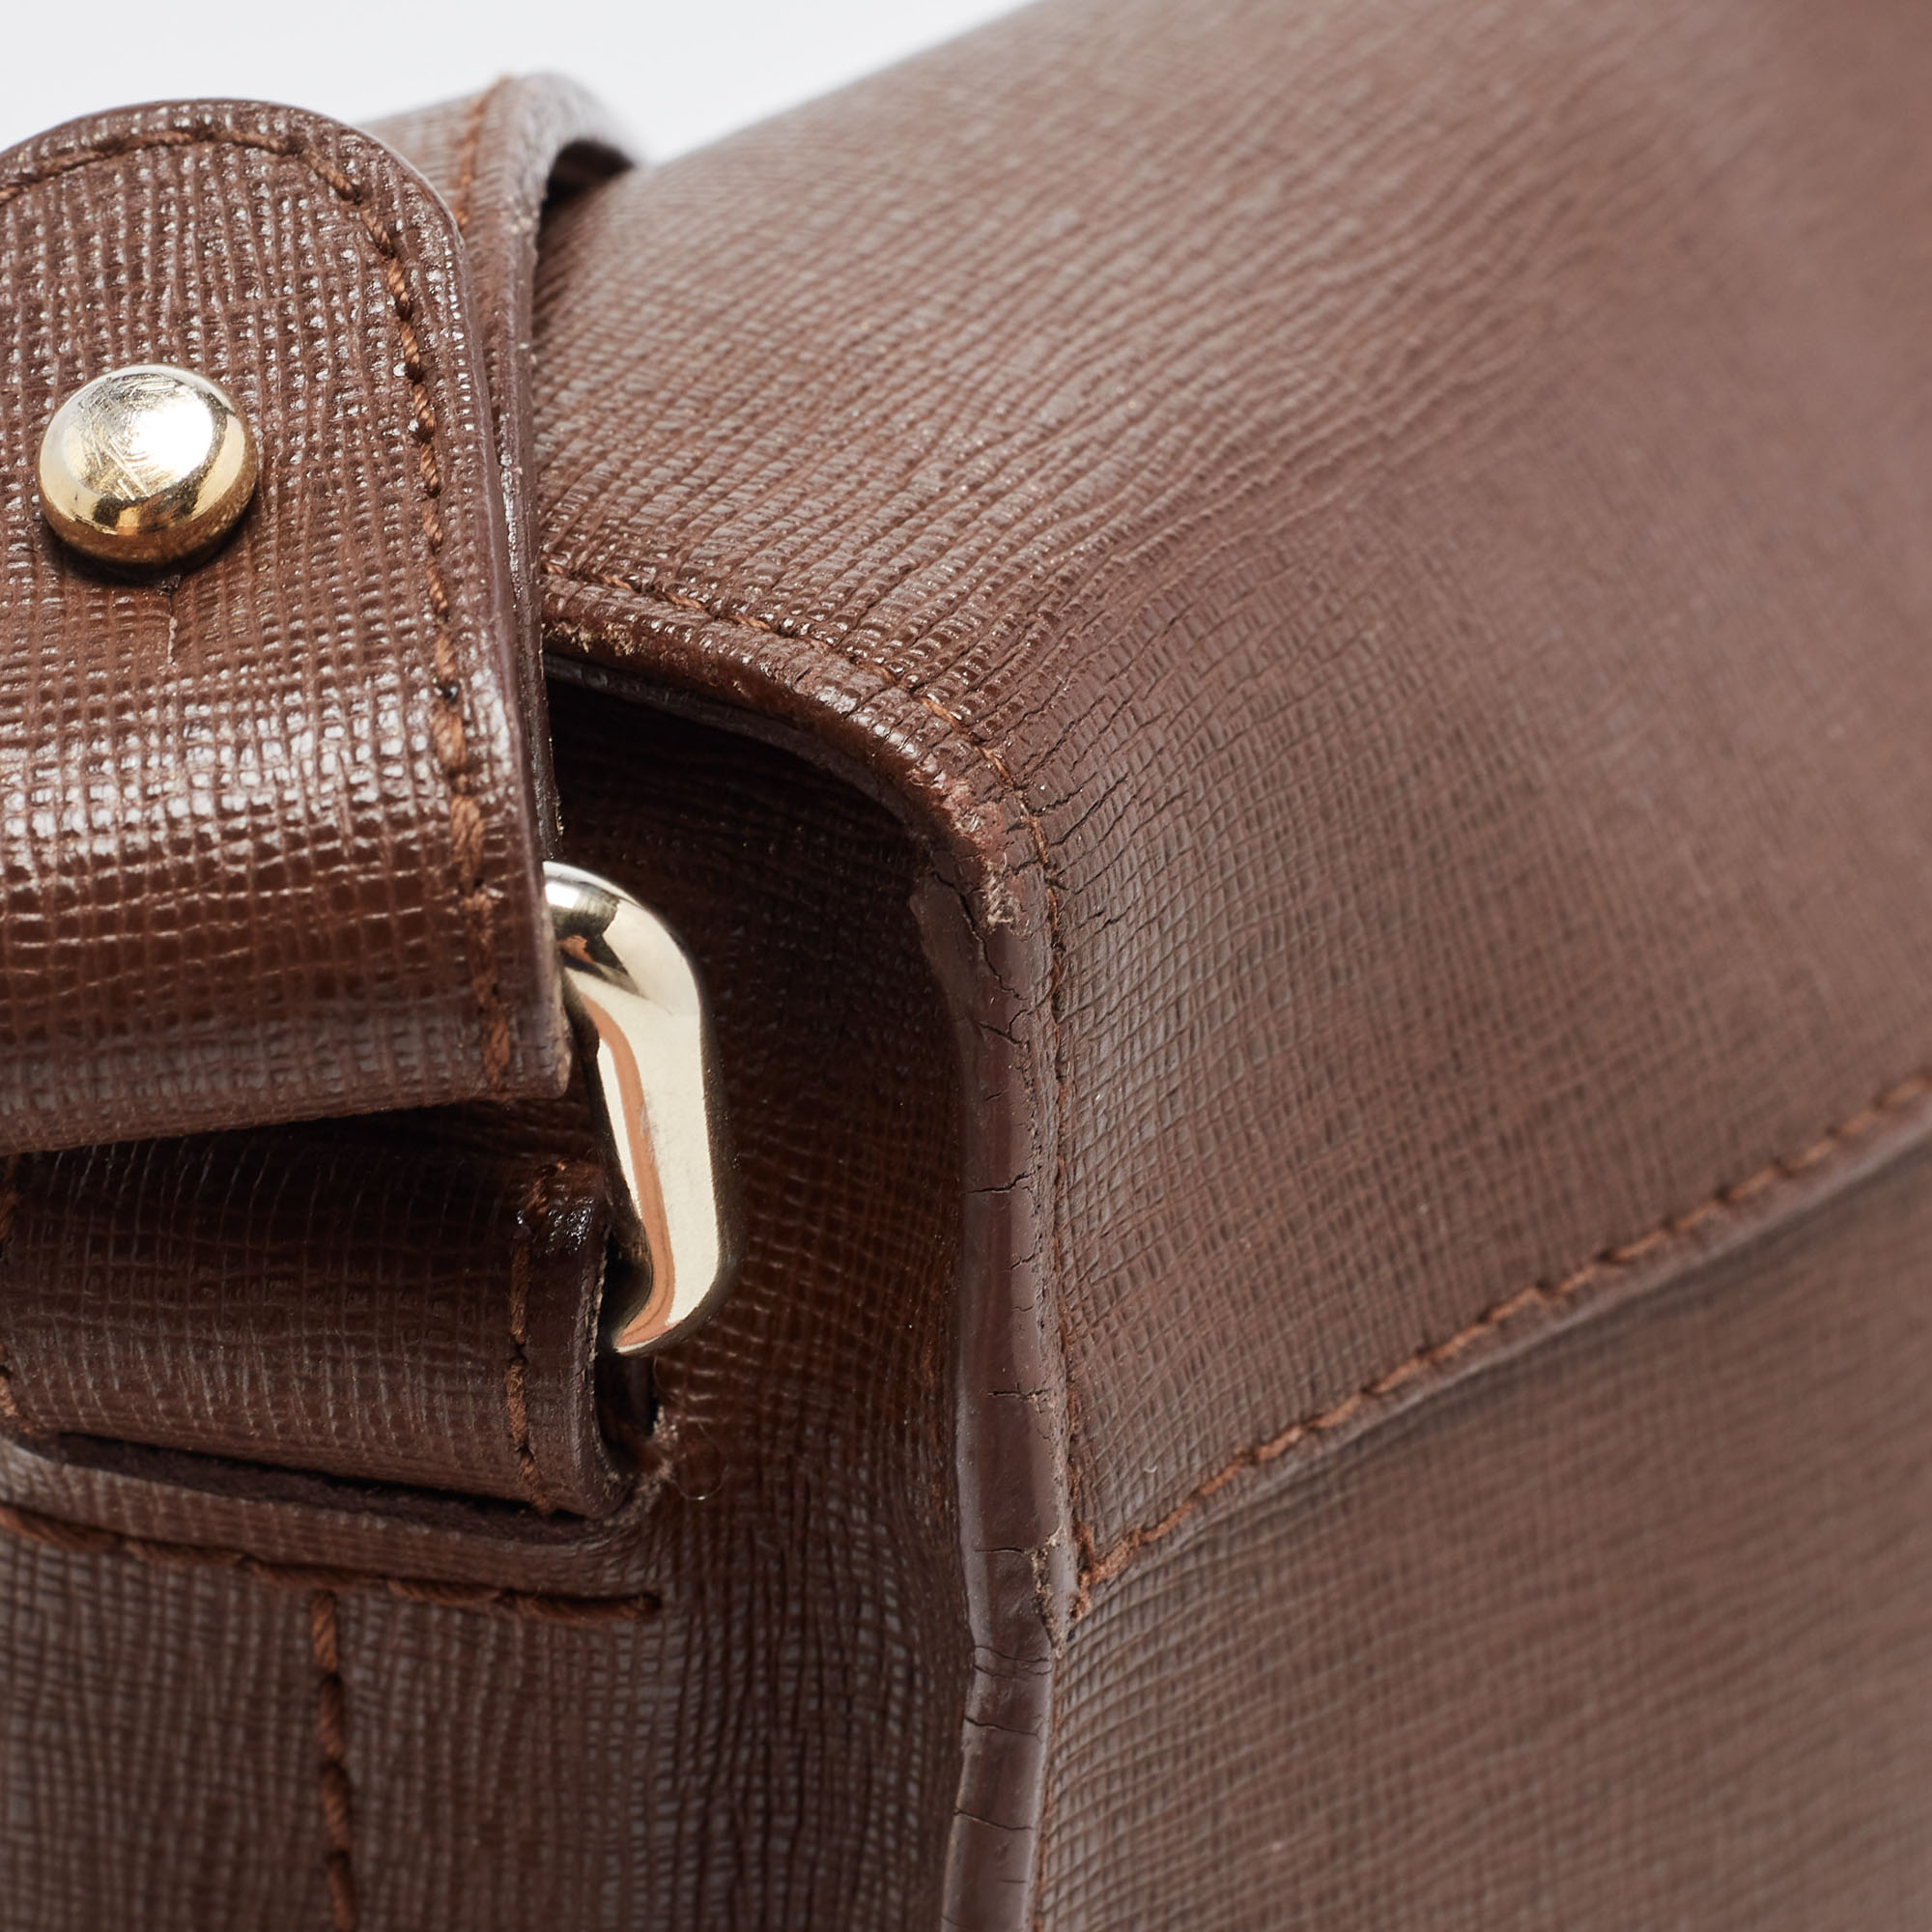 Furla Brown Leather Messenger Bag